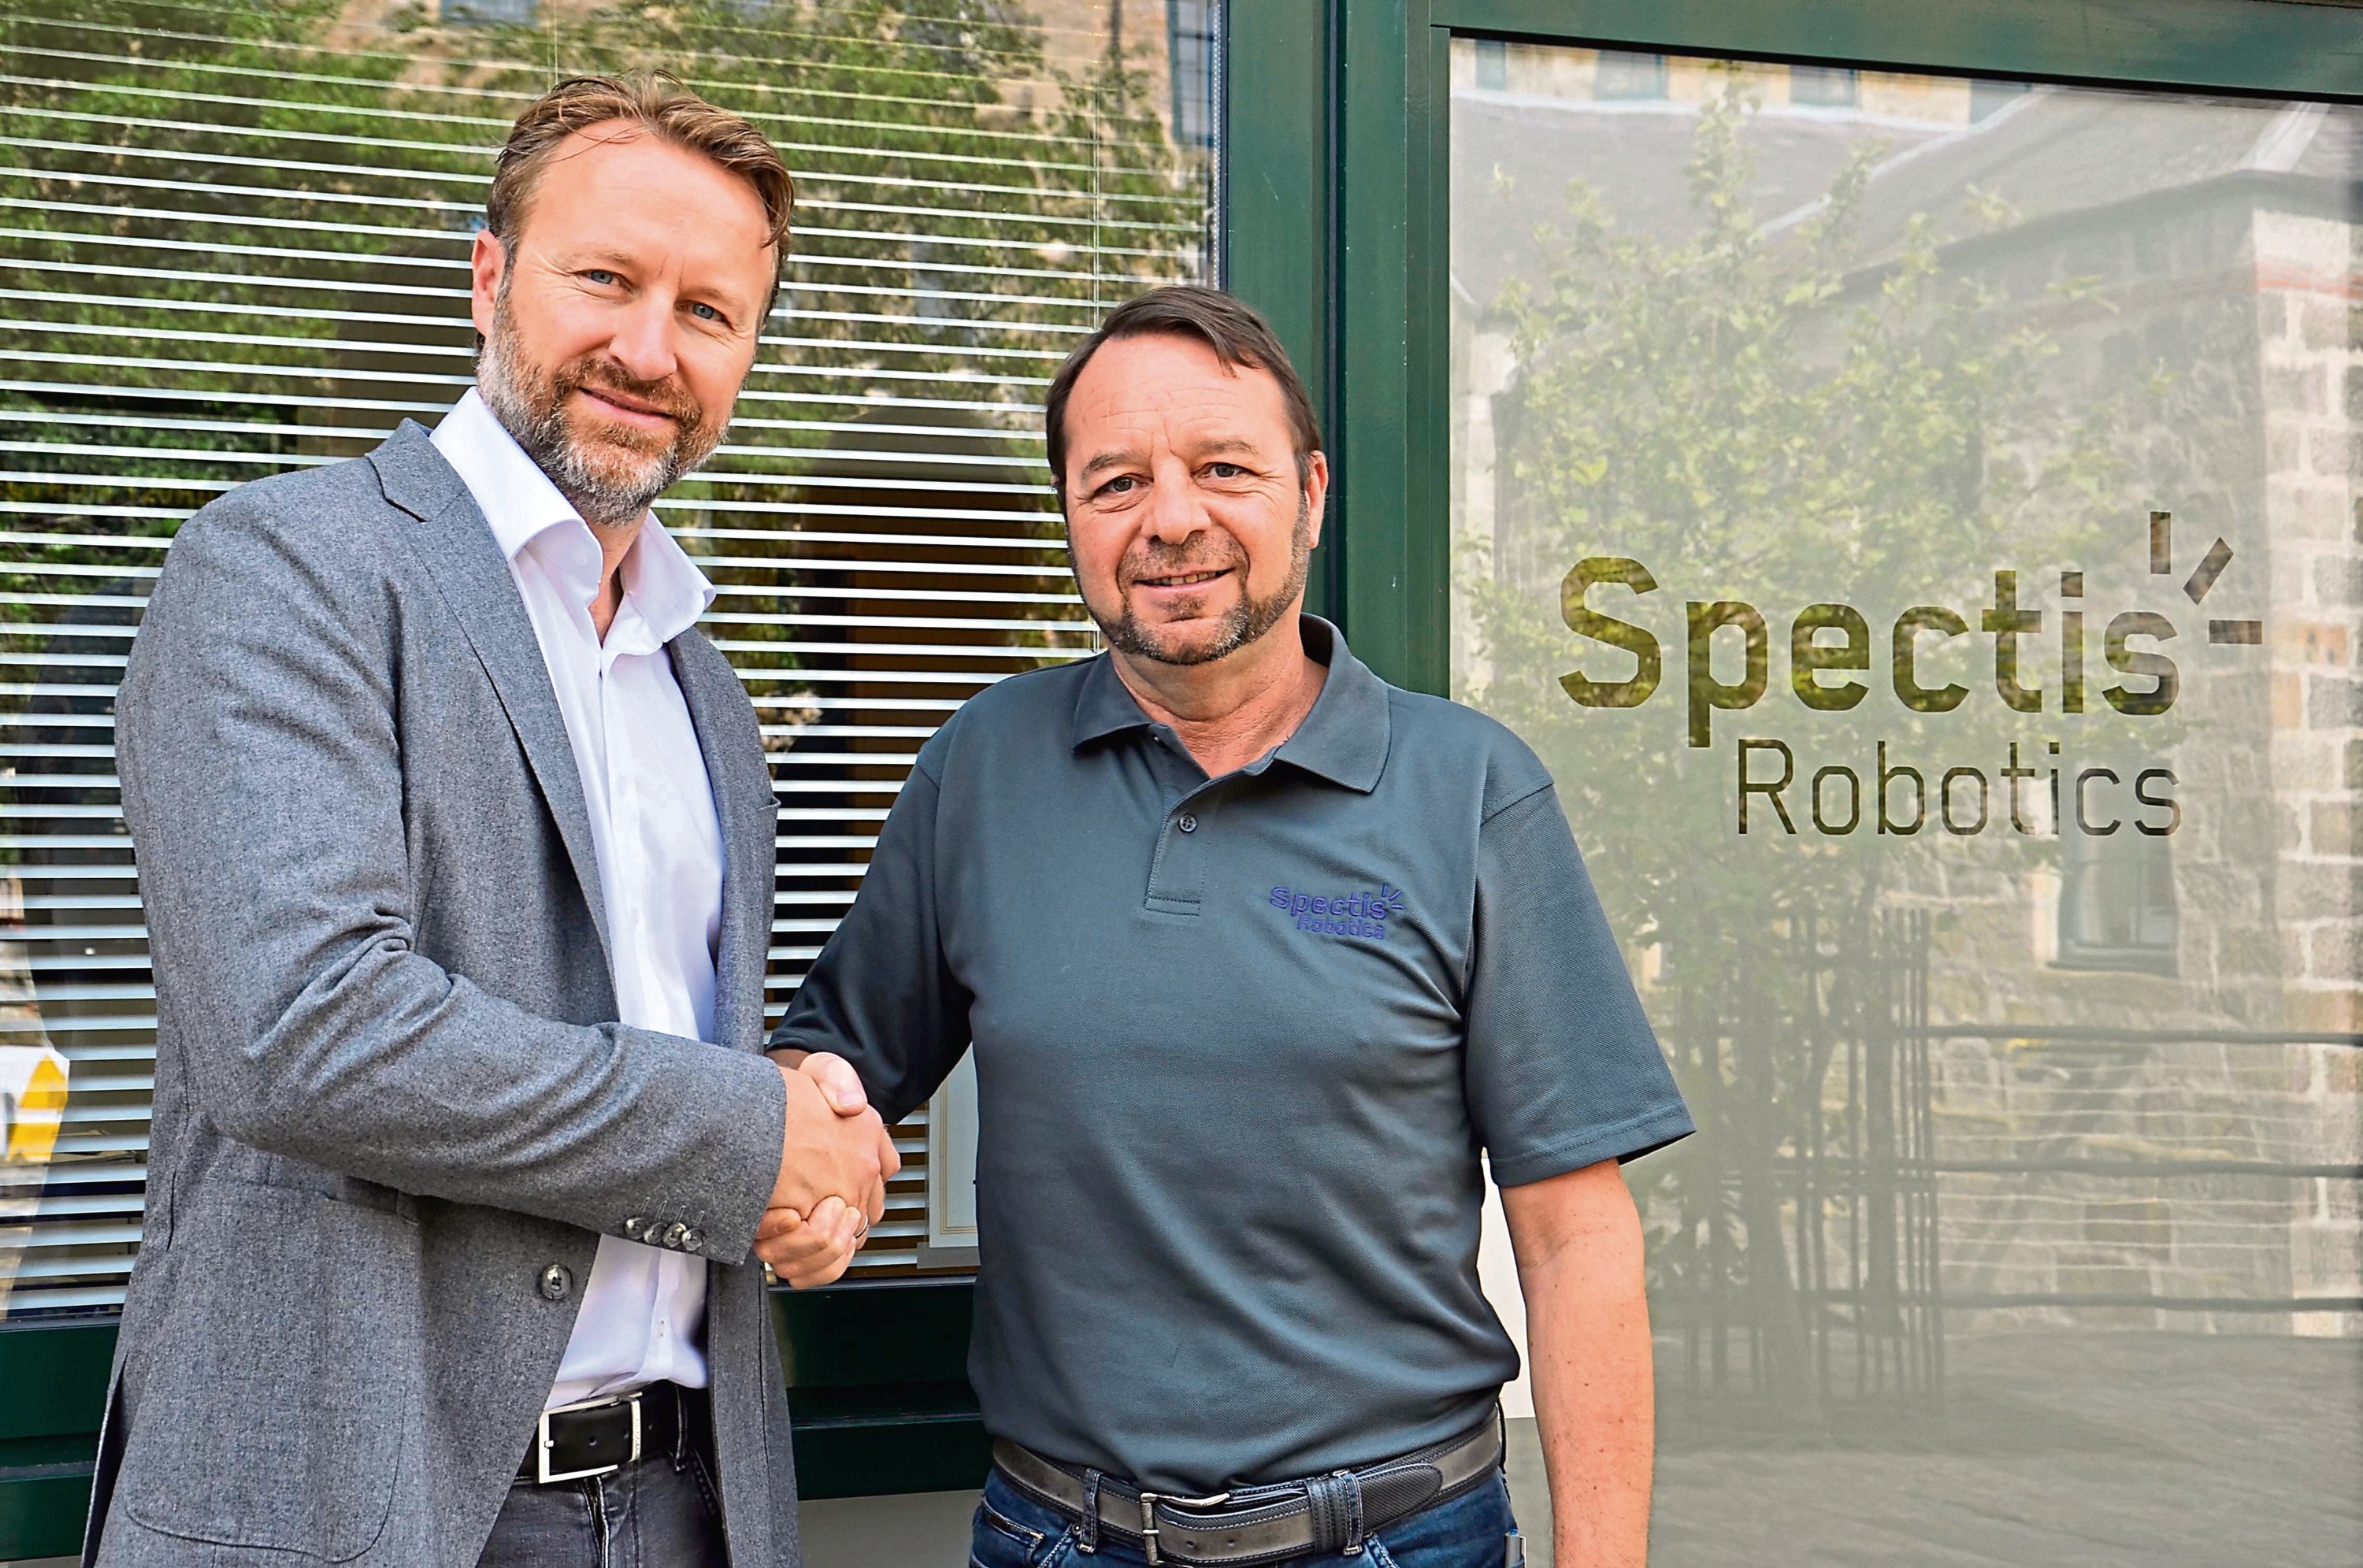 Marcus Jocham (left), head of business development at Dekra Visatec, and Brian Storie (right), managing director of Spectis Robotics.